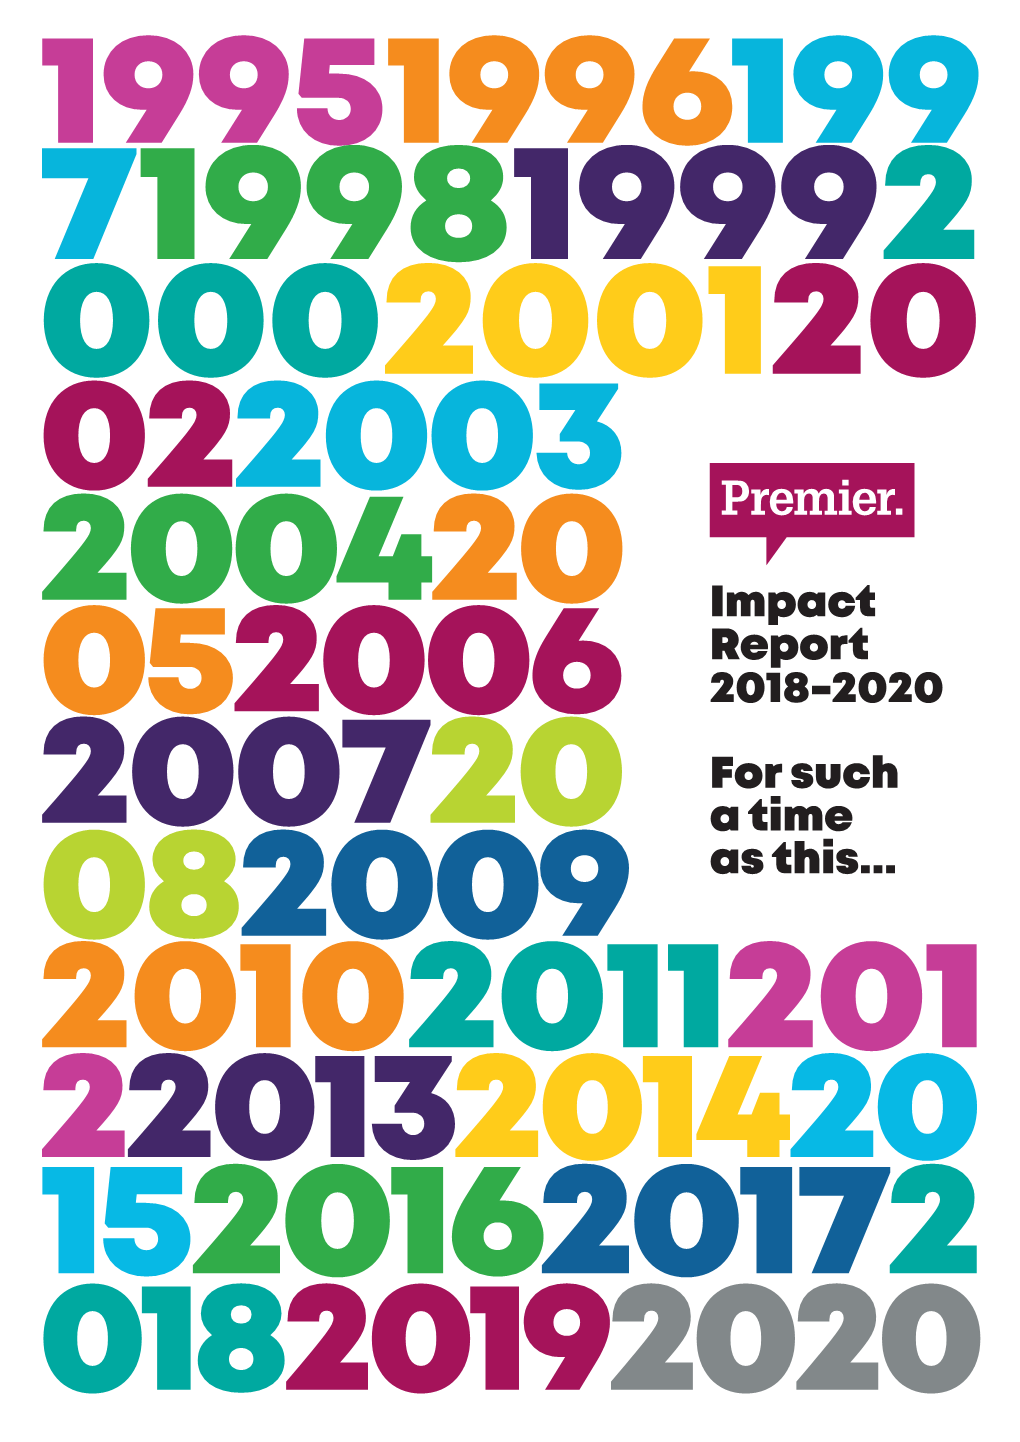 Annual Report 2018-2020